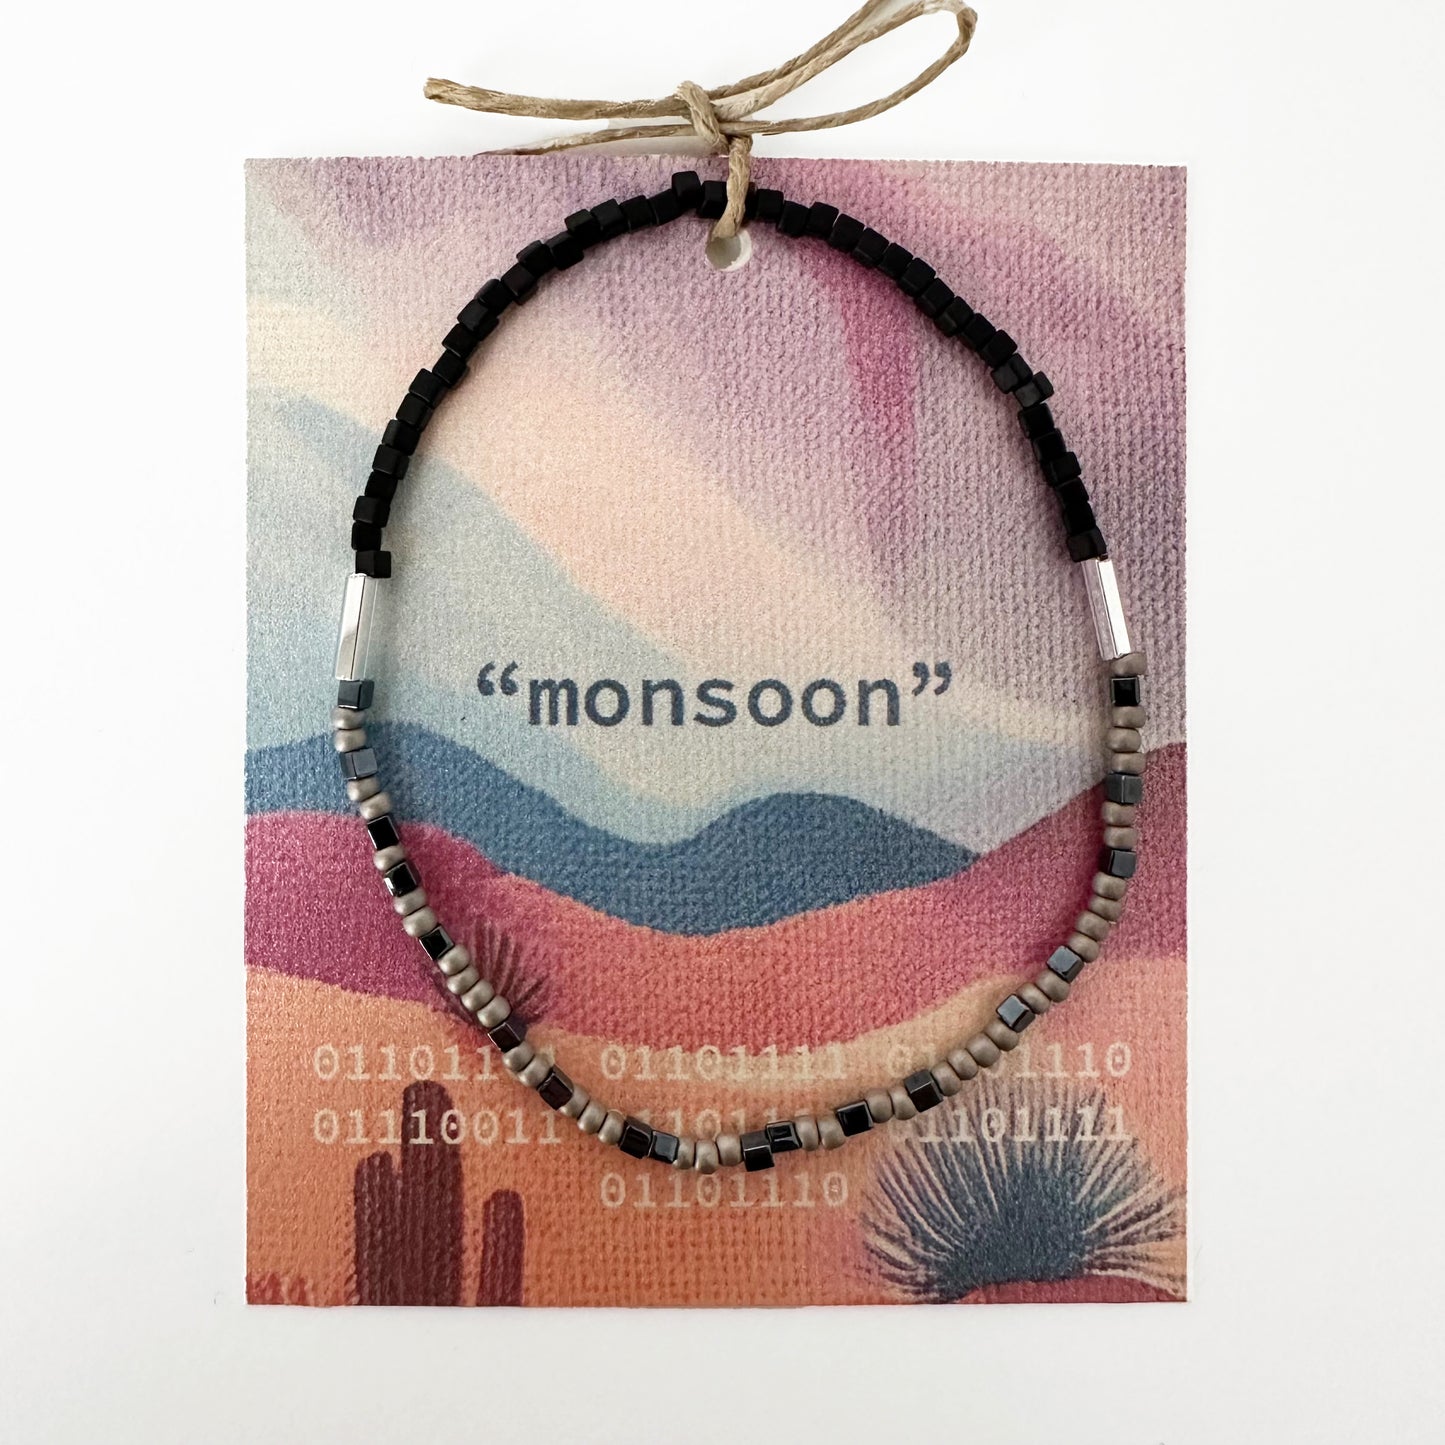 "monsoon" Binary Code Bracelet